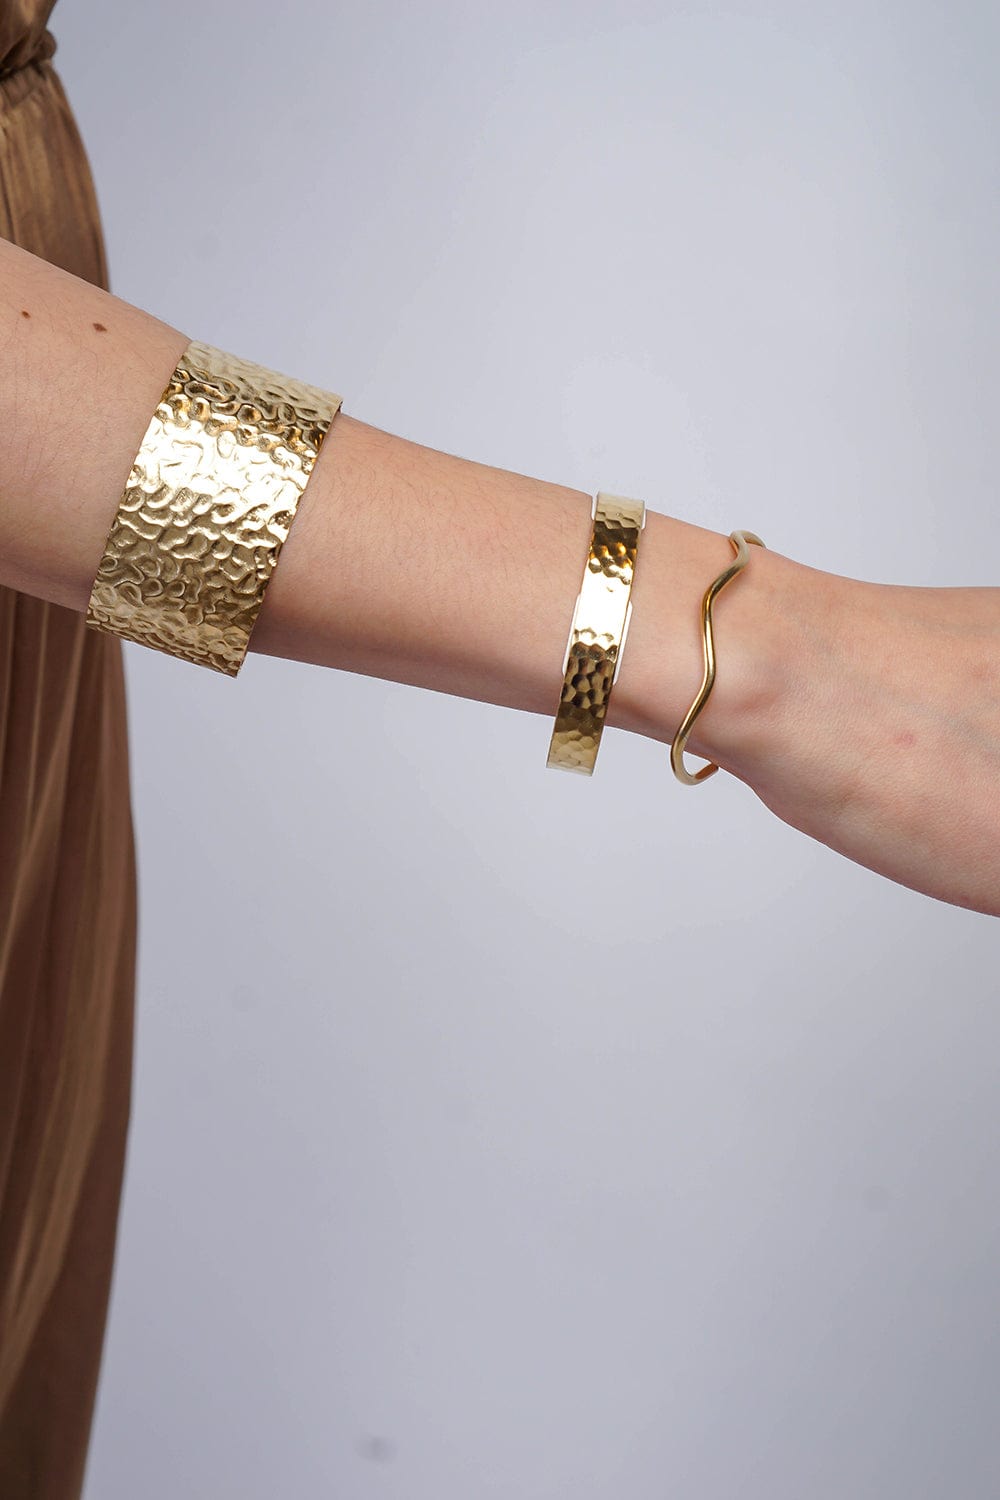 BRACELETS Hammered Gold Cuff Bracelet - Chloe Dao